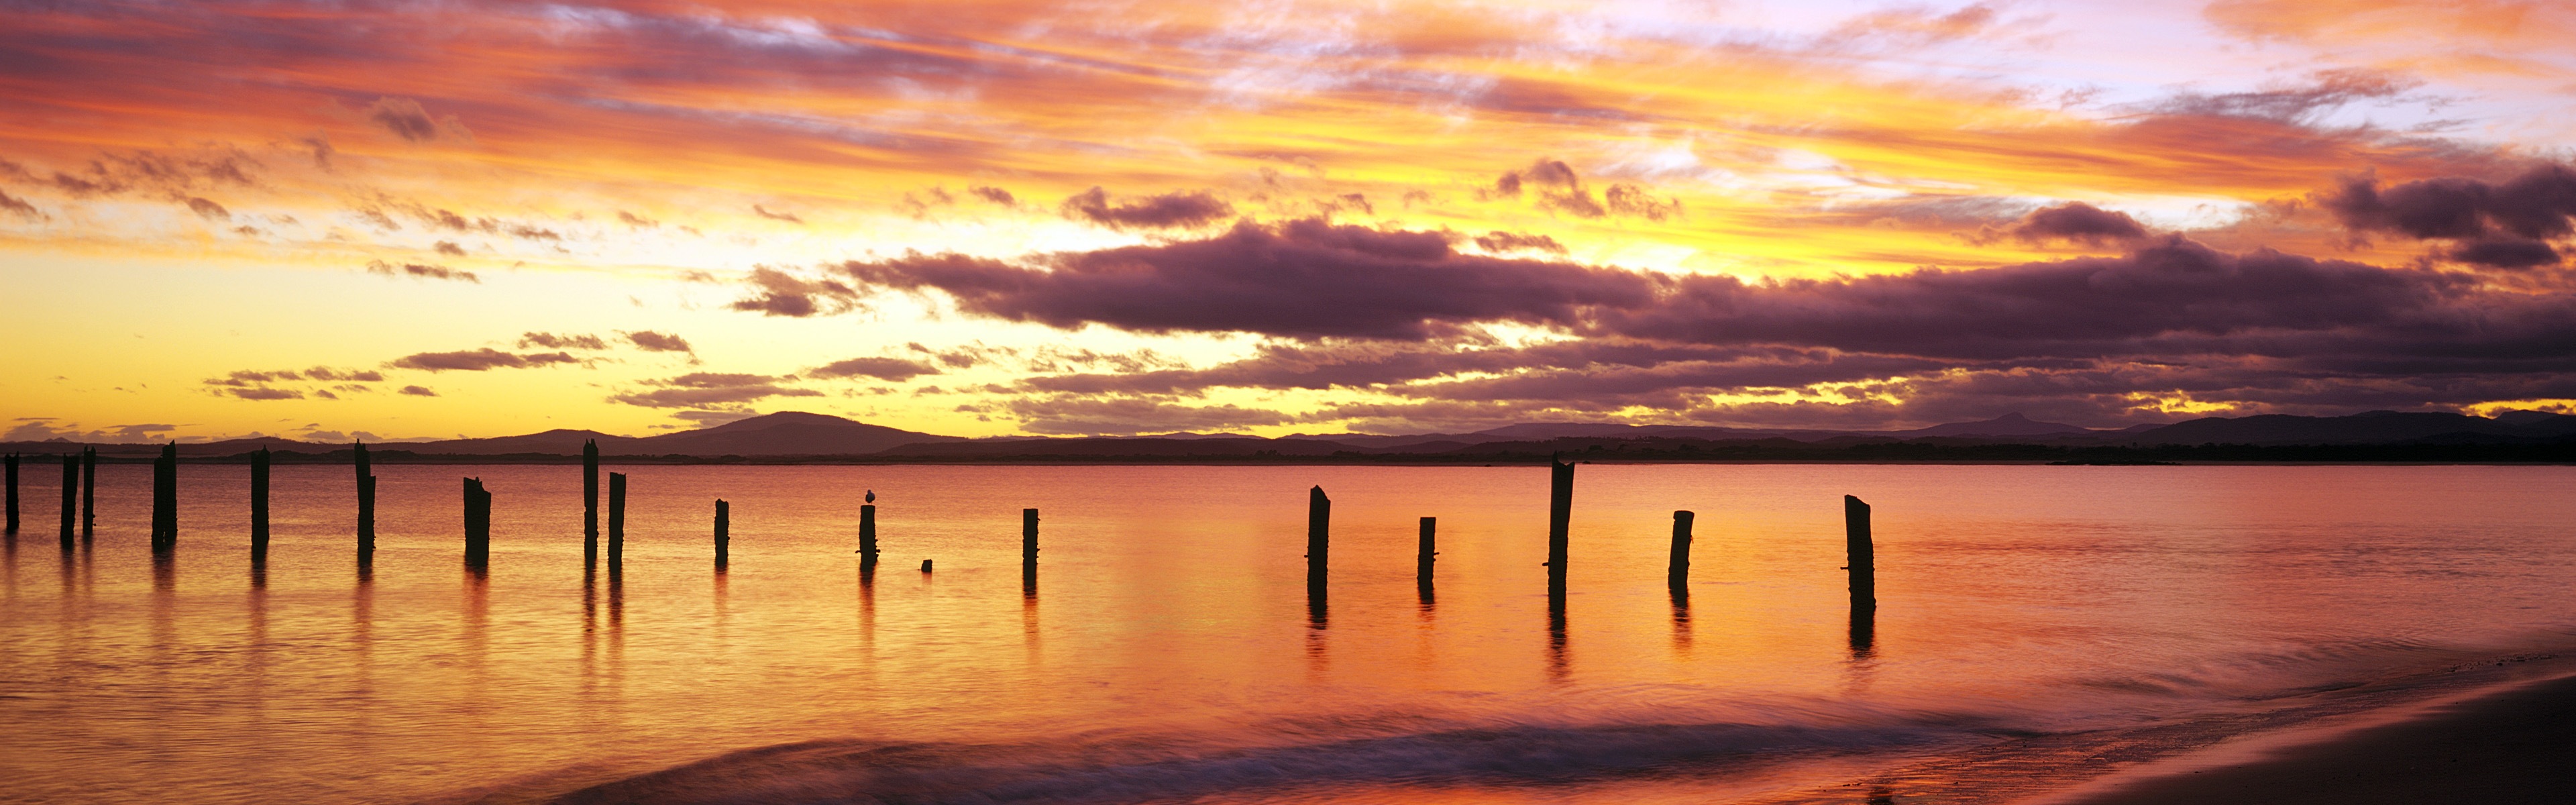 Beautiful beach sunset, Windows 8 panoramic widescreen wallpapers #7 - 3840x1200